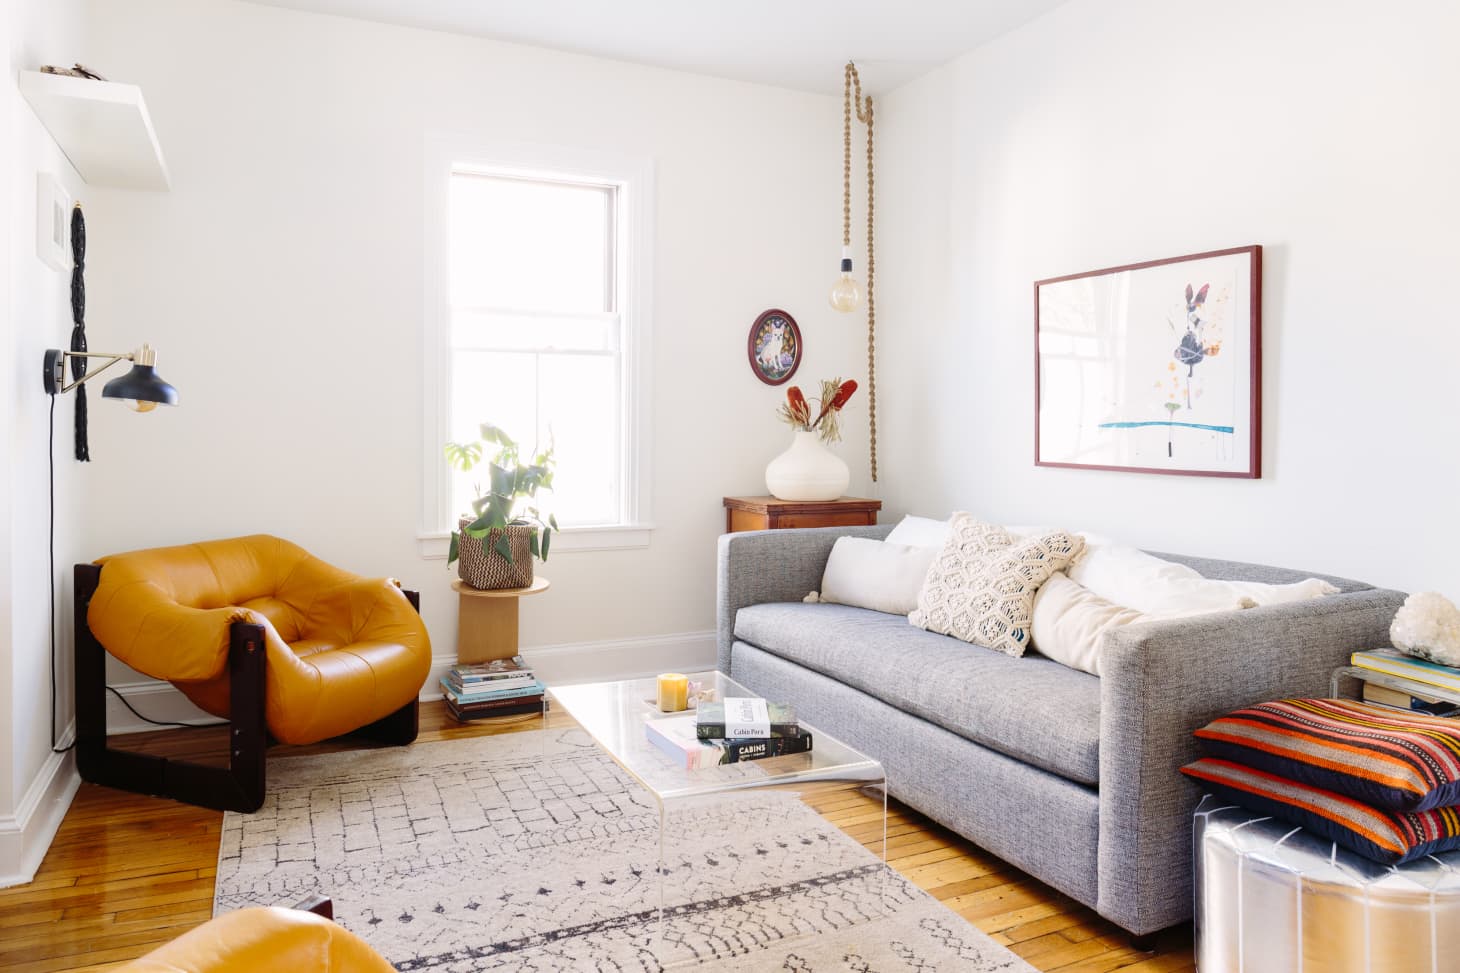 Ideas To Design A Small Living Room